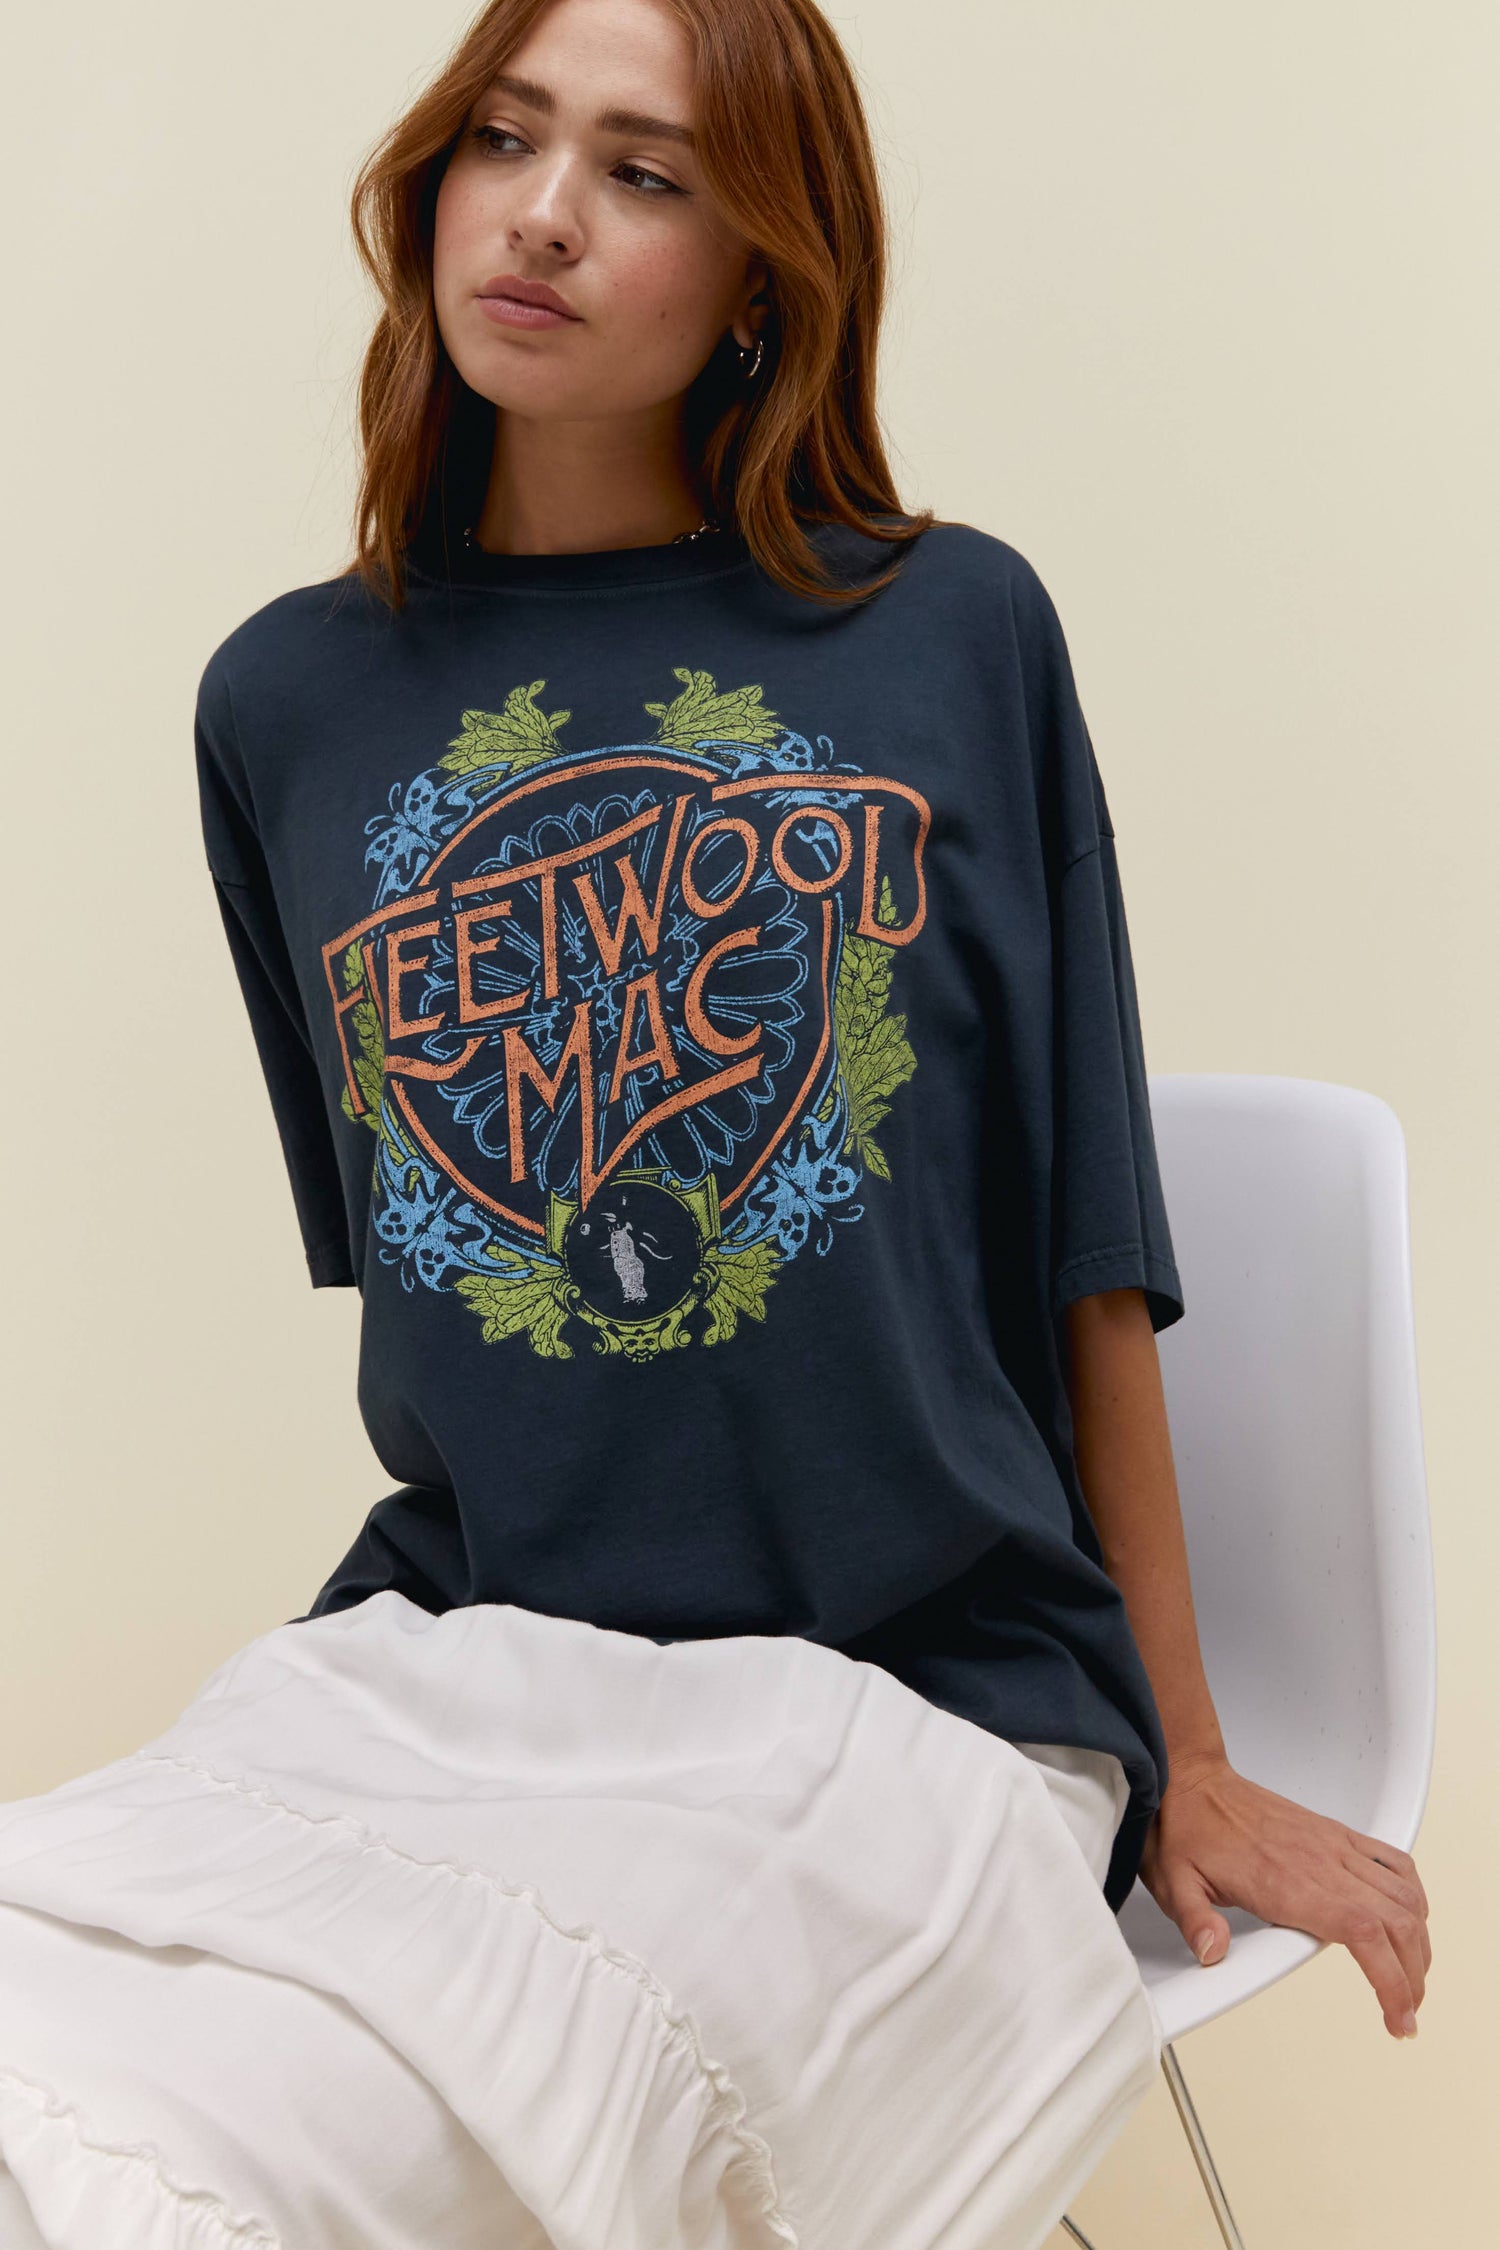 Model wearing an oversized Fleetwood Mac flower crest graphic tee in vintage black.